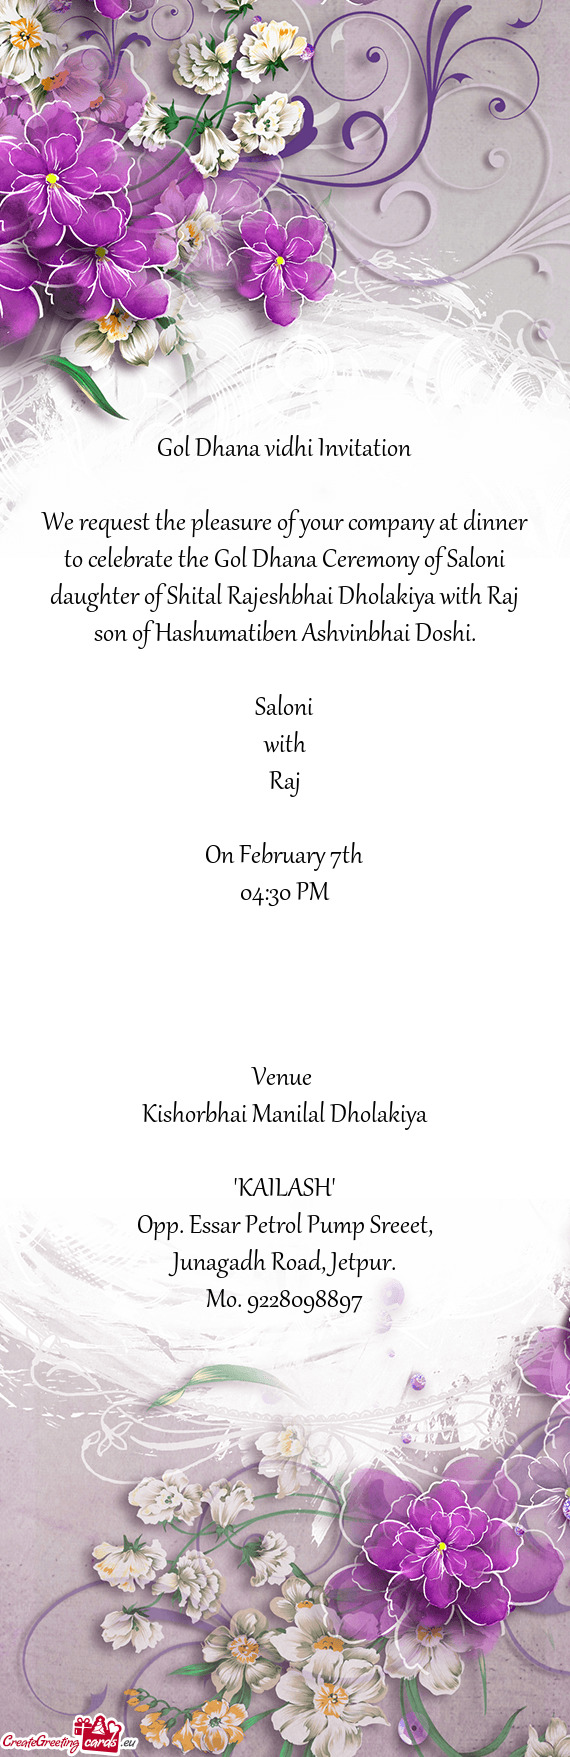 Hter of Shital Rajeshbhai Dholakiya with Raj son of Hashumatiben Ashvinbhai Doshi